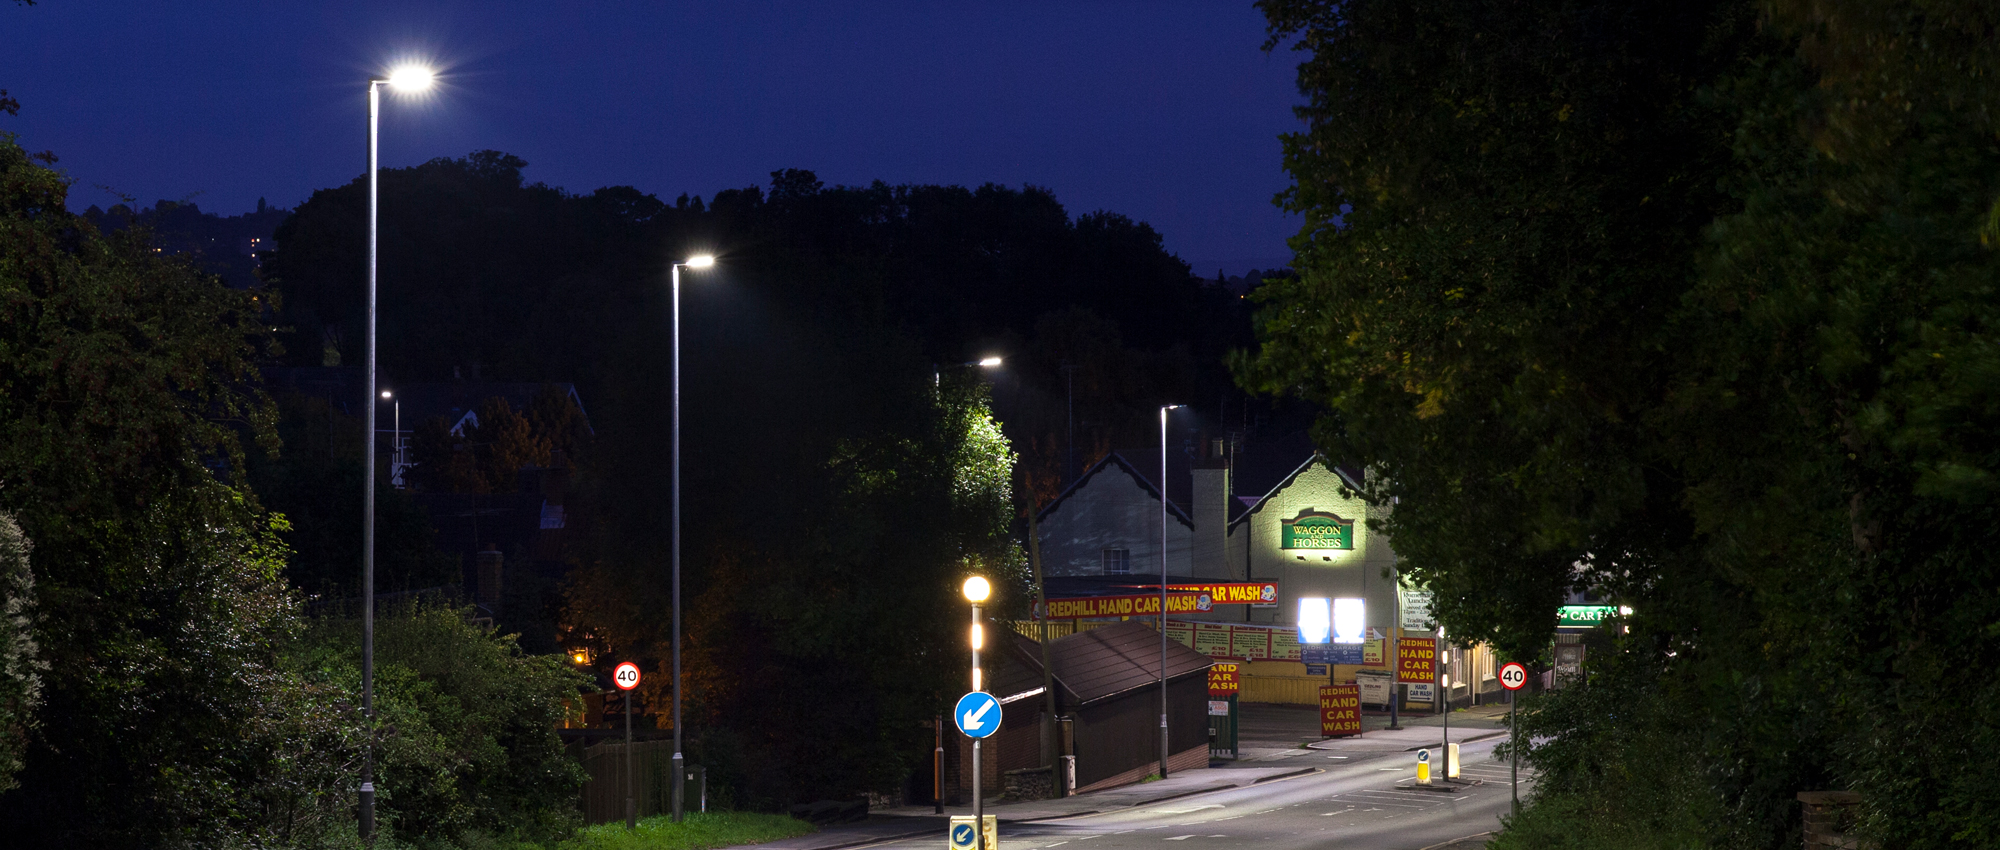 Highway lighting upgrade Nottinghamshire 2